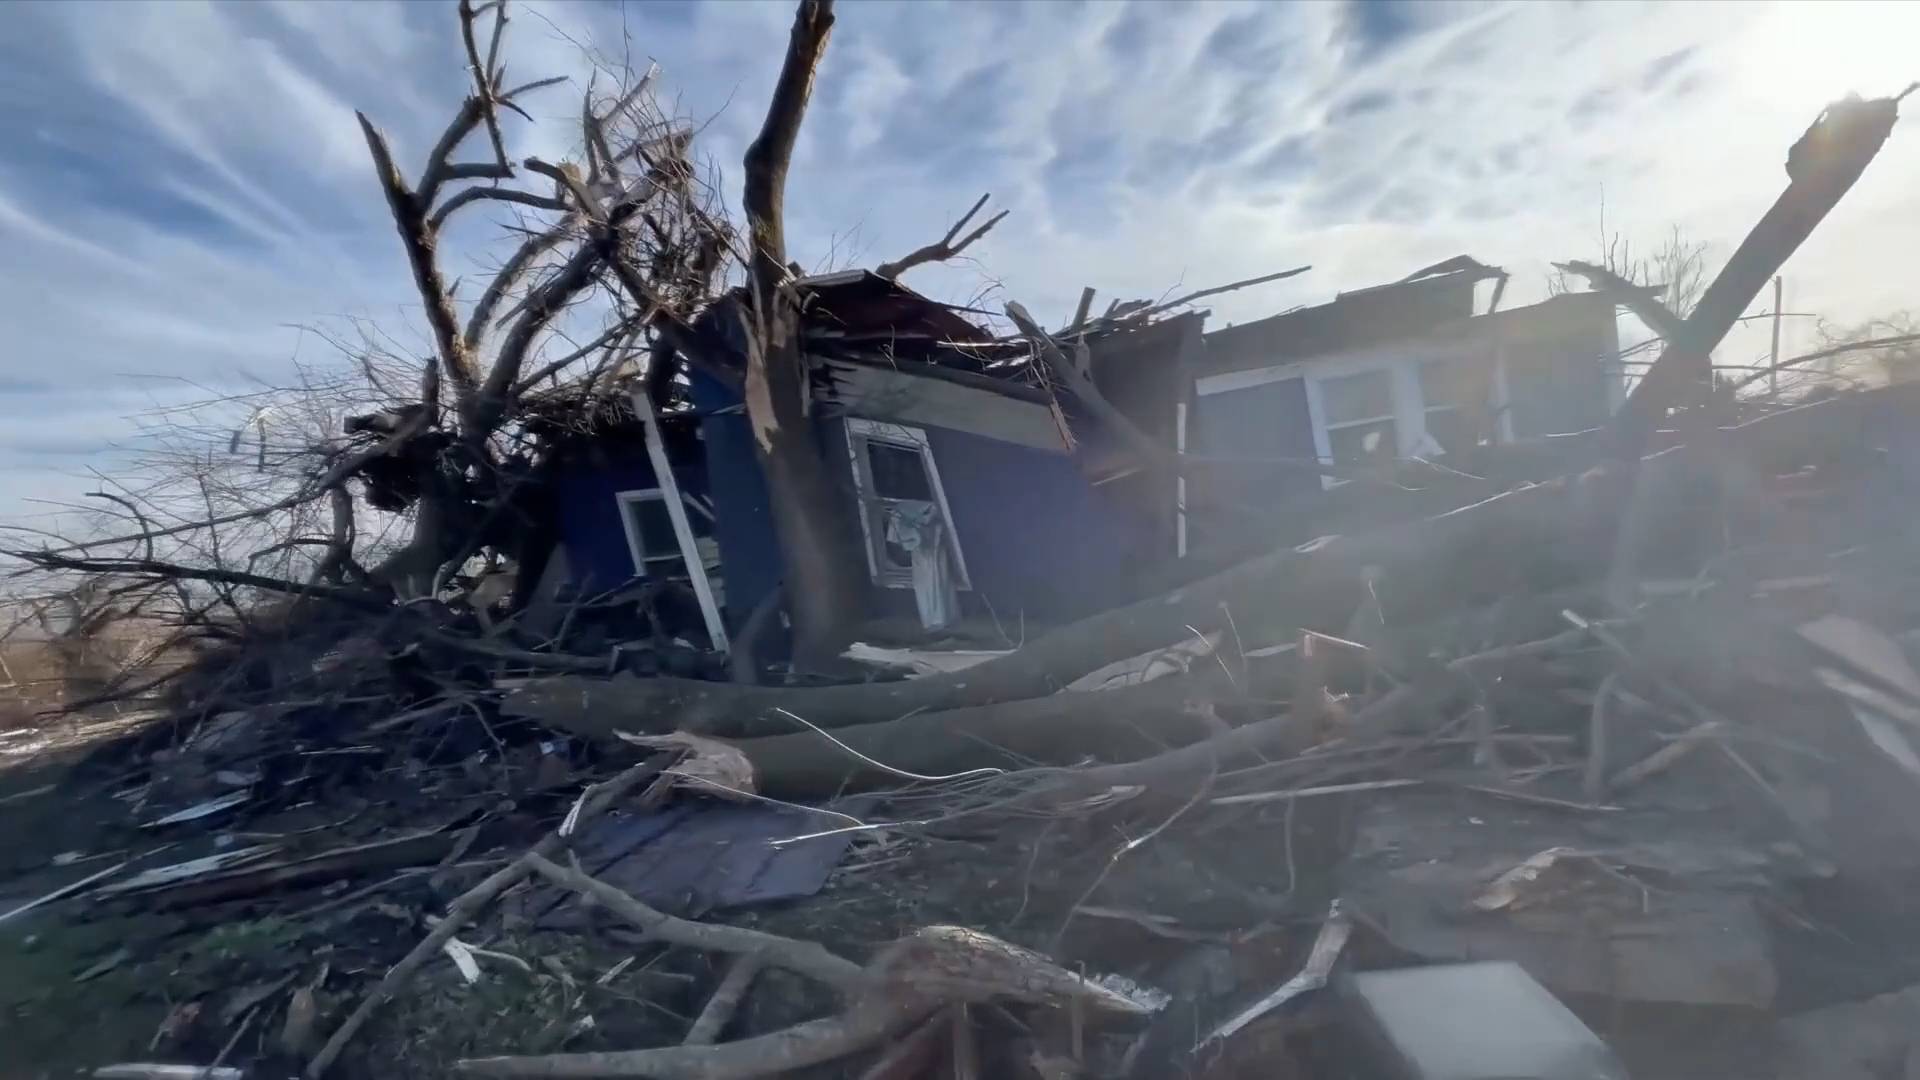 GLOBALink | Tornadoes wreaking deadly havoc in U.S.